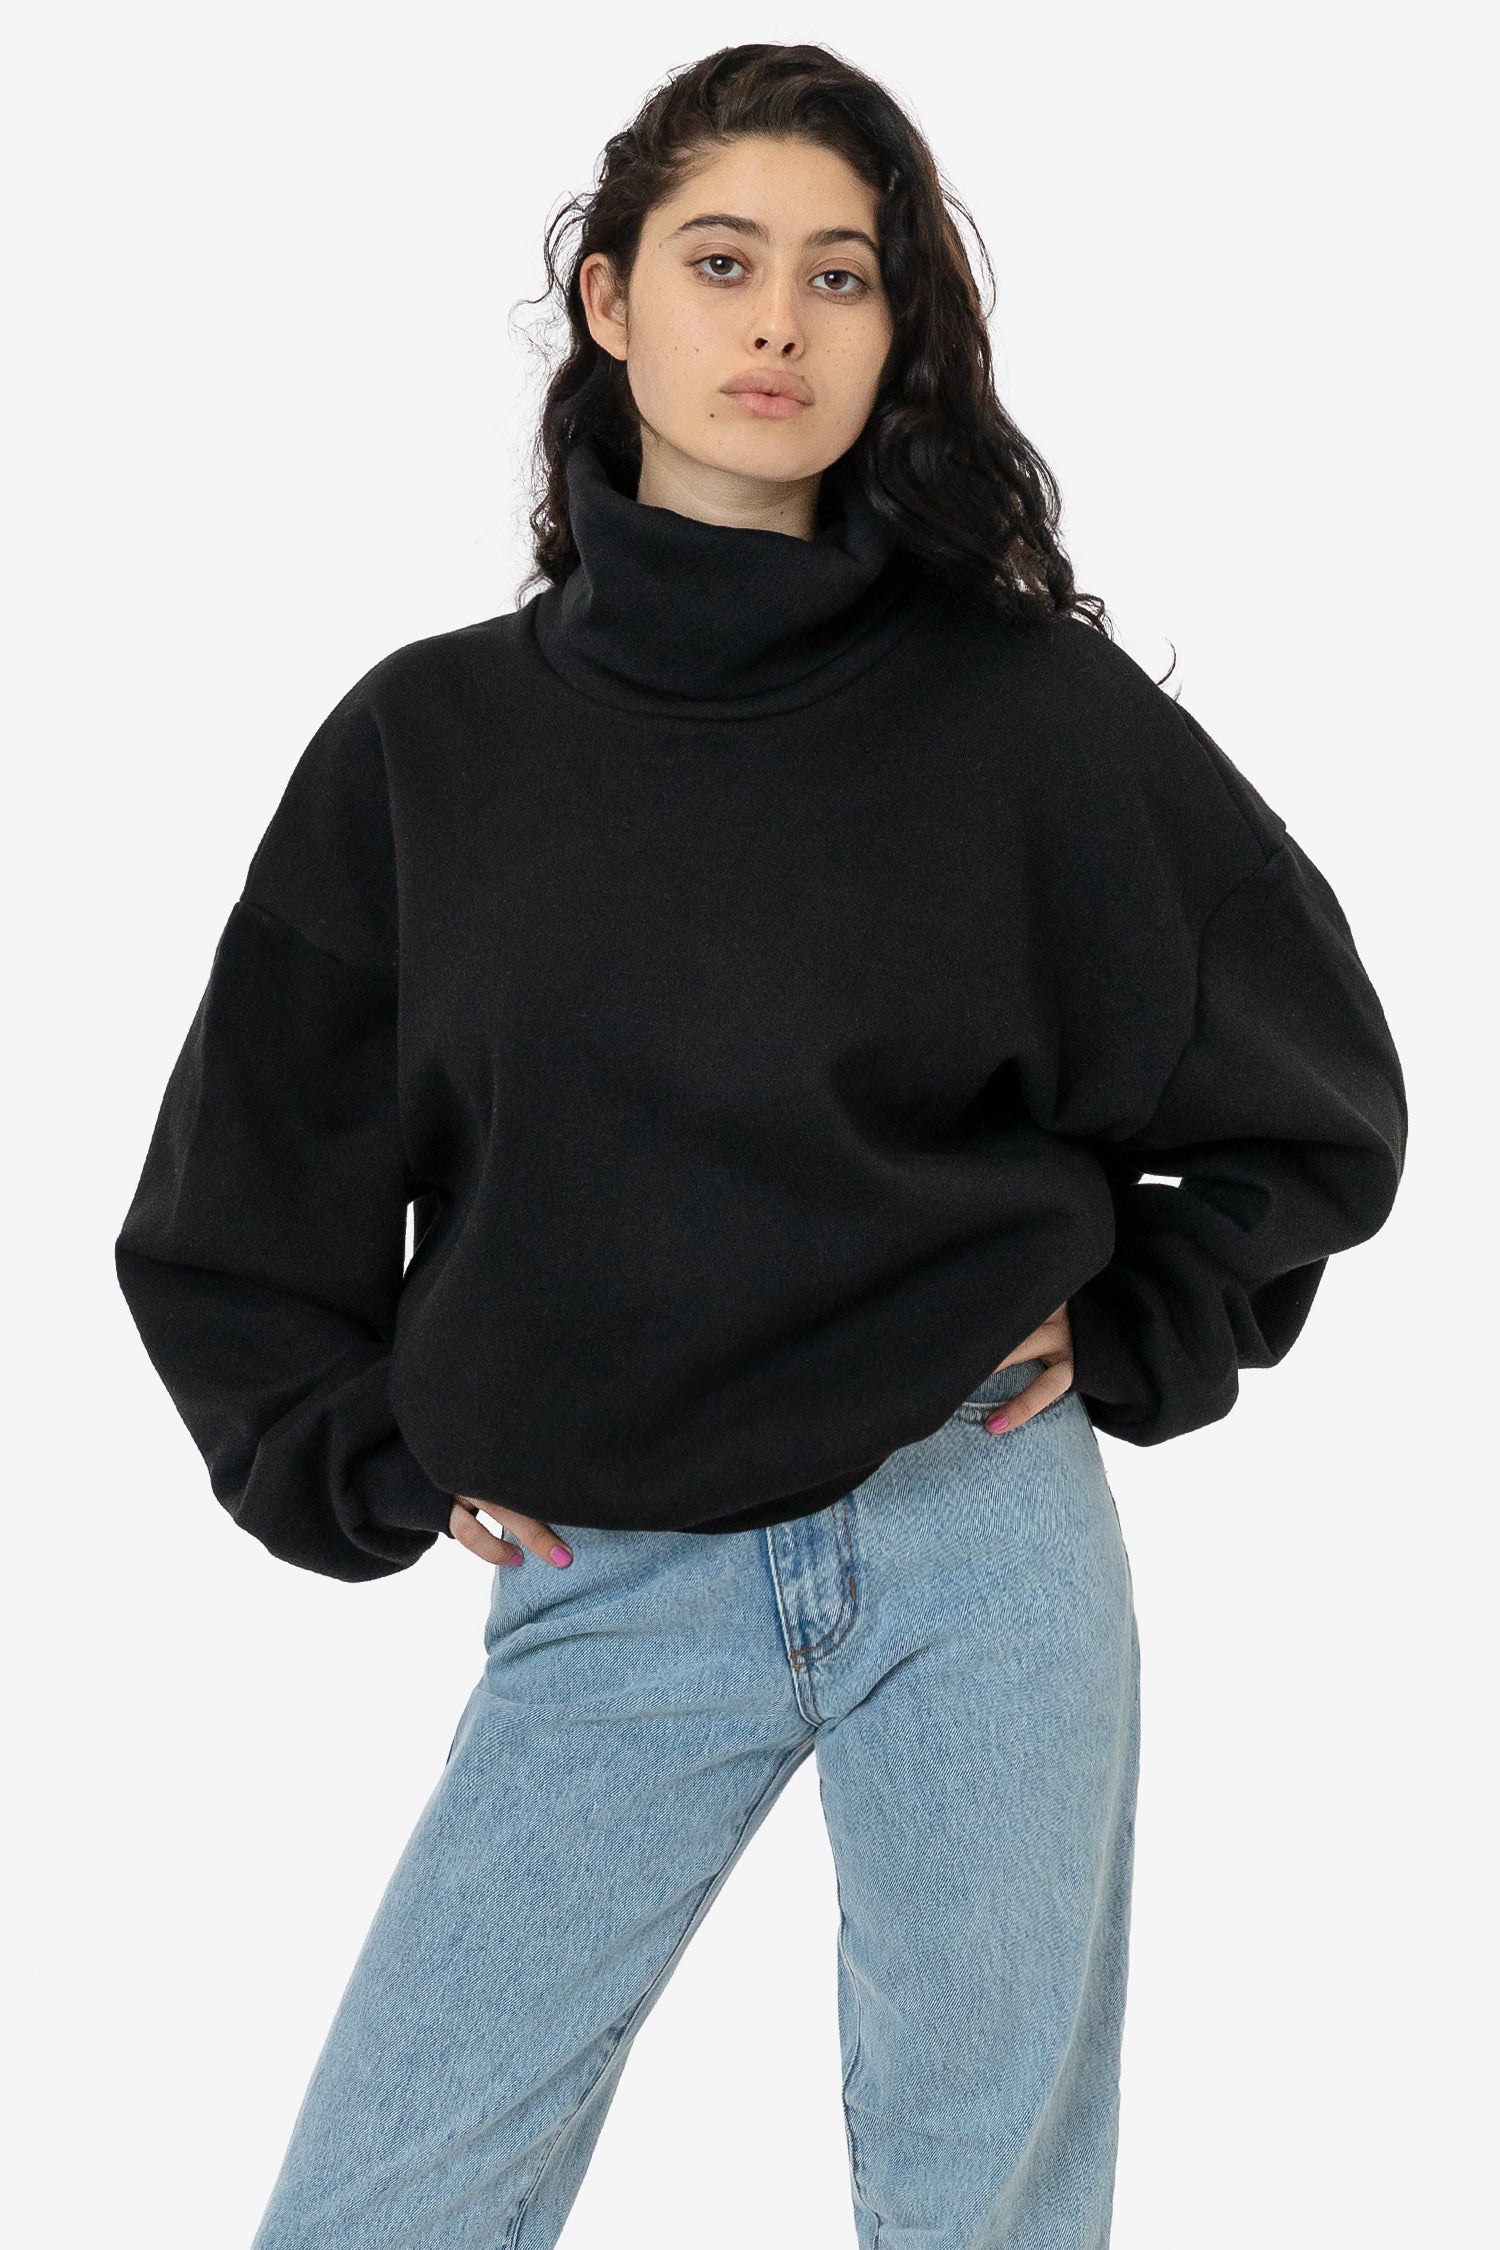 Women's Sweatshirts - Turtlenecks